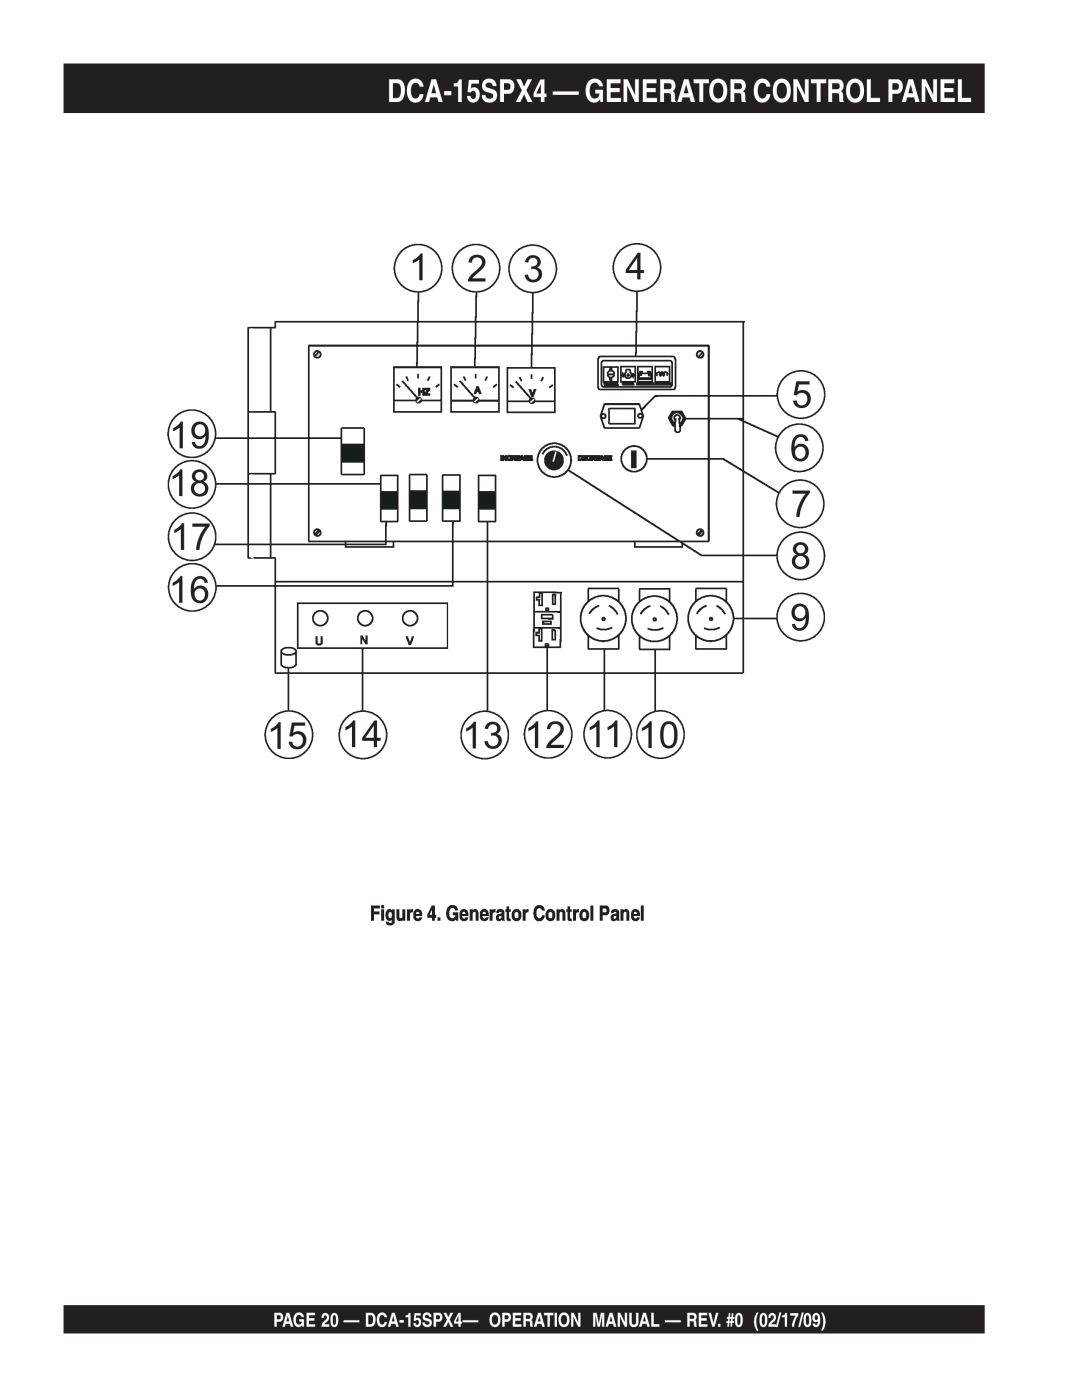 Multiquip operation manual DCA-15SPX4 - GENERATOR CONTROL PANEL, Generator Control Panel, Increase, Decrease 